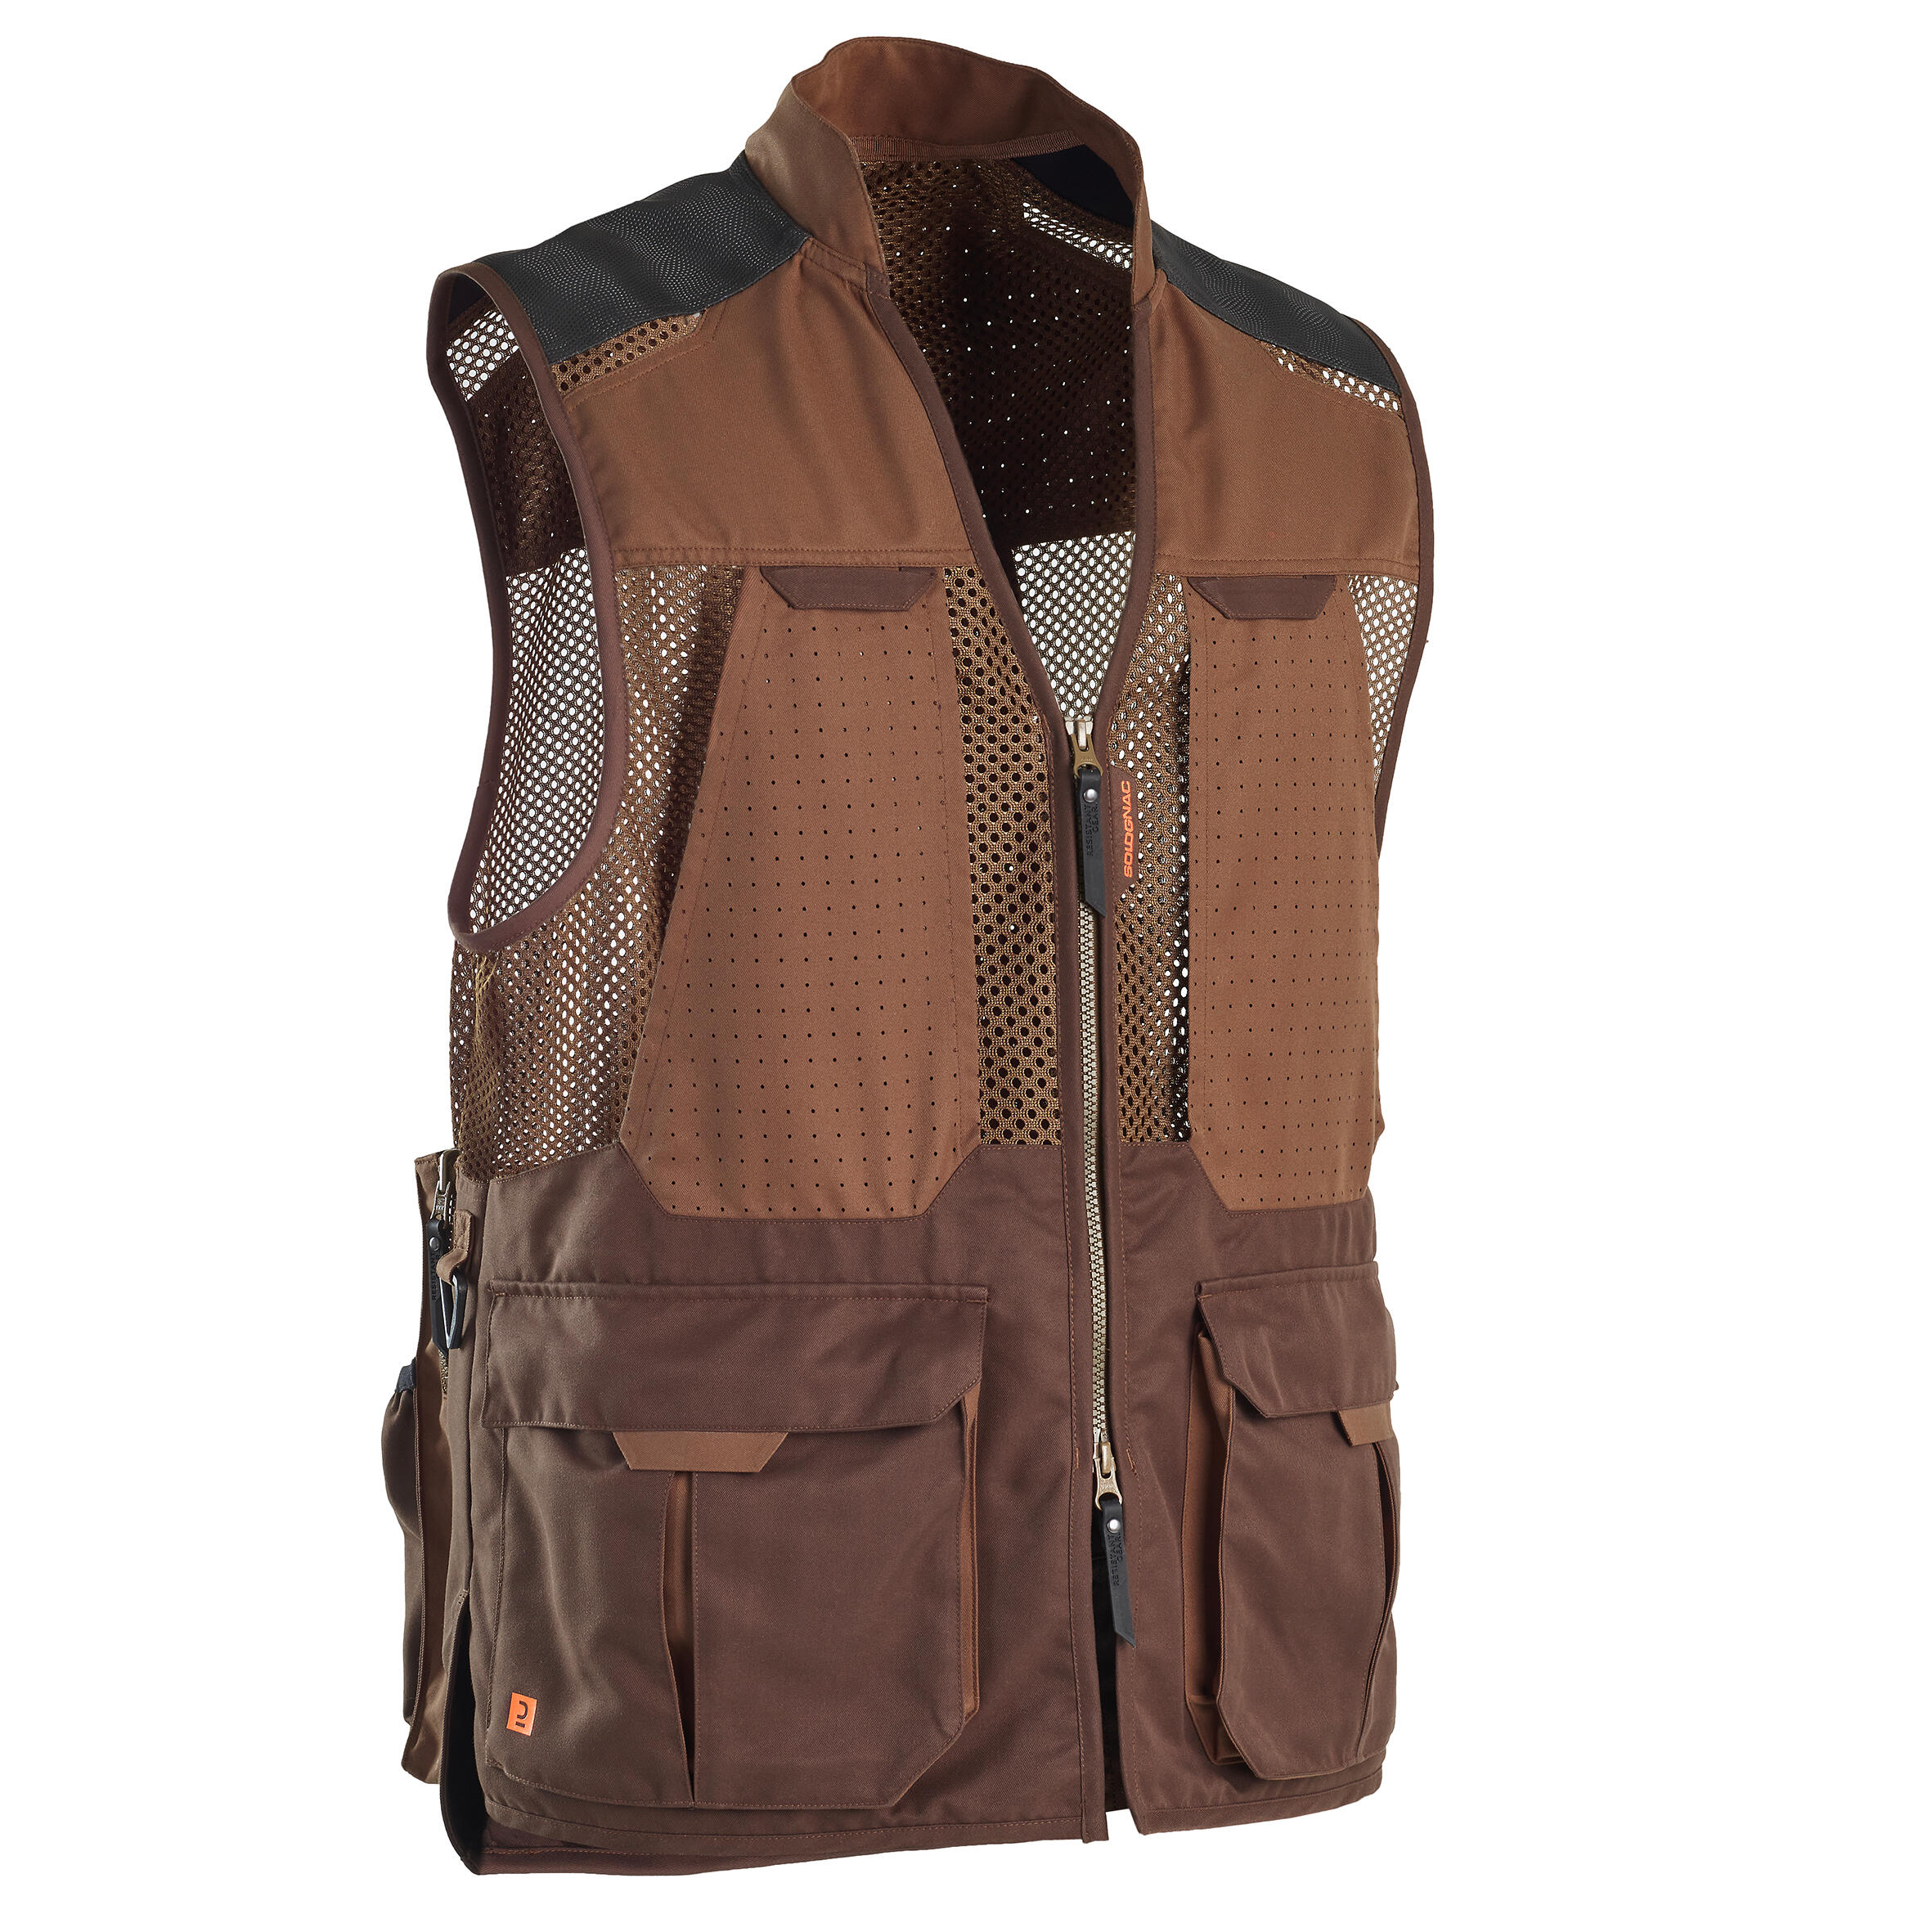 SOLOGNAC Men's Hunting Breathable Waistcoat - 520 brown V2